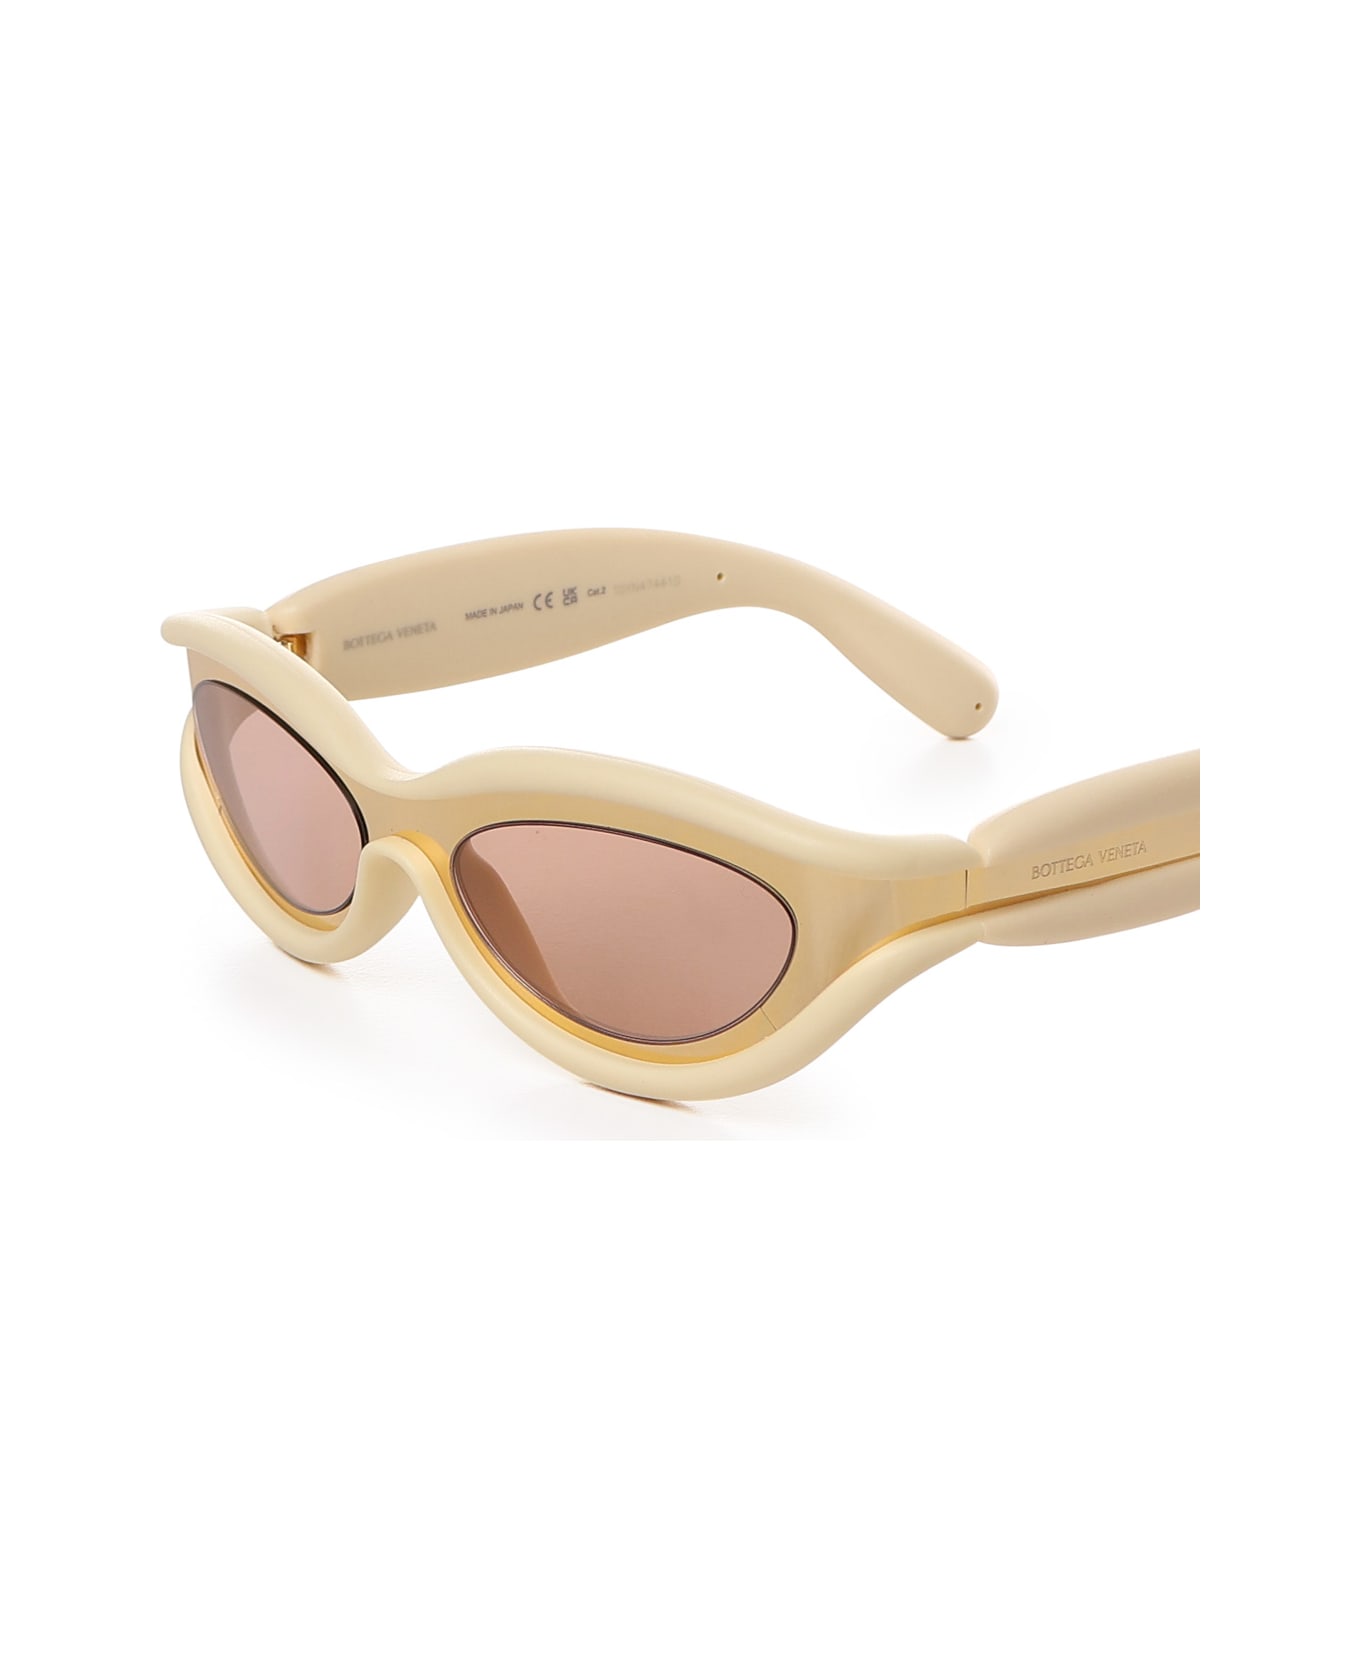 Bottega Veneta Eyewear Hem Sunglasses - GOLD-GOLD-BROWN